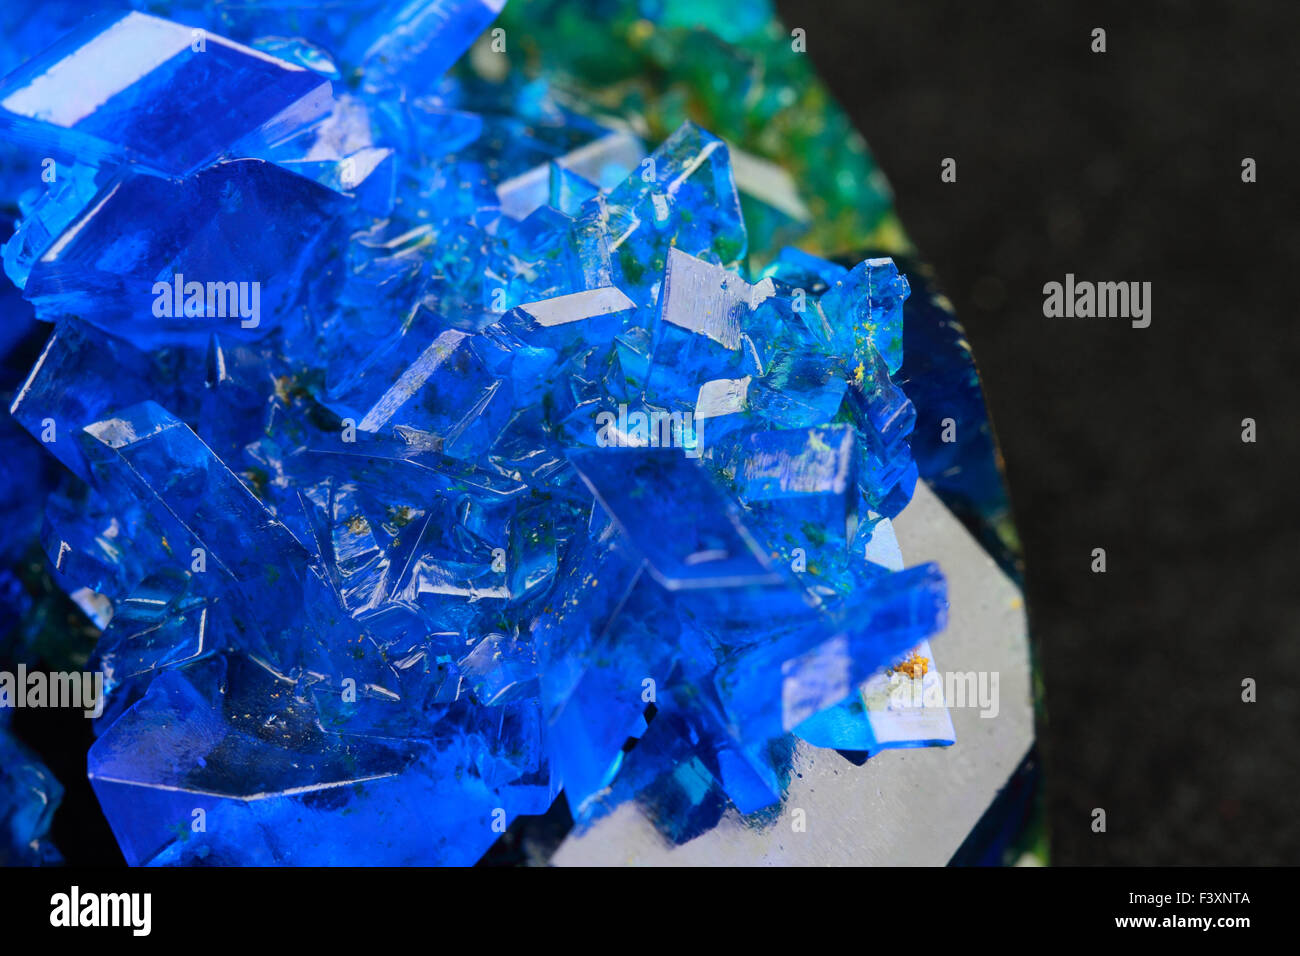 Sulfato de cobre cristal fotografías e imágenes de alta resolución - Alamy